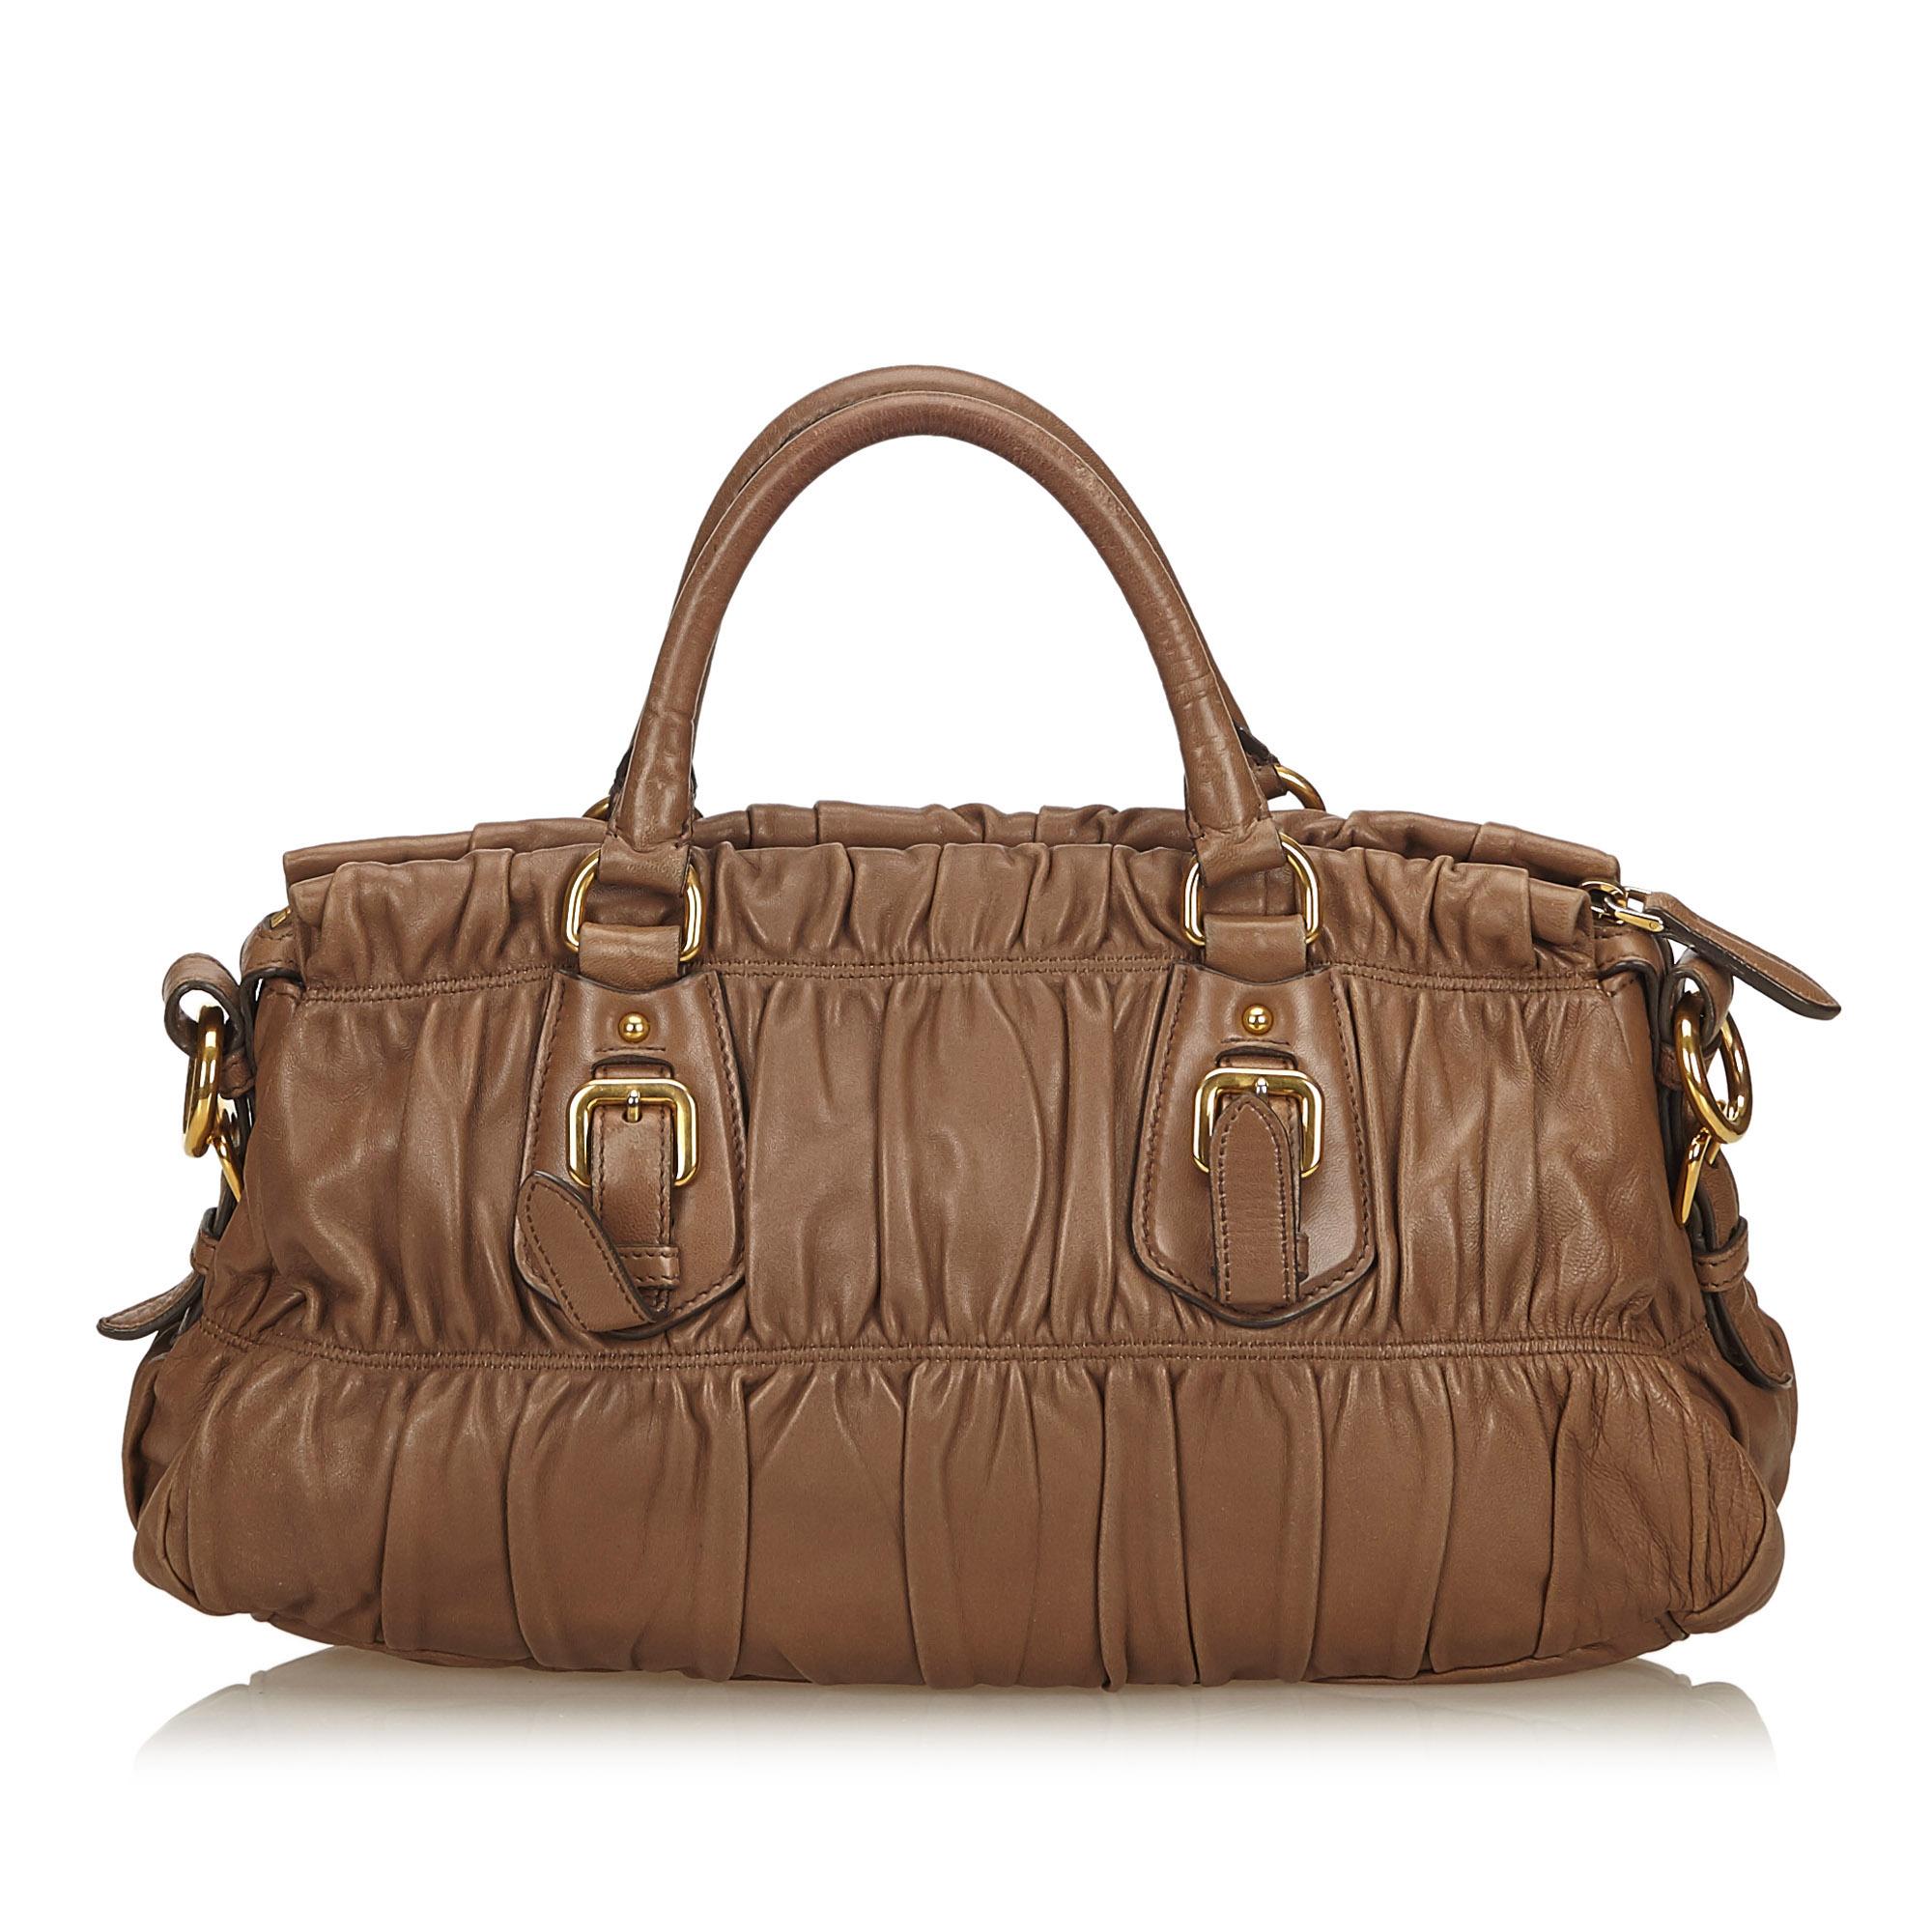 Prada Brown Gathered Leather Handbag In Good Condition For Sale In Orlando, FL